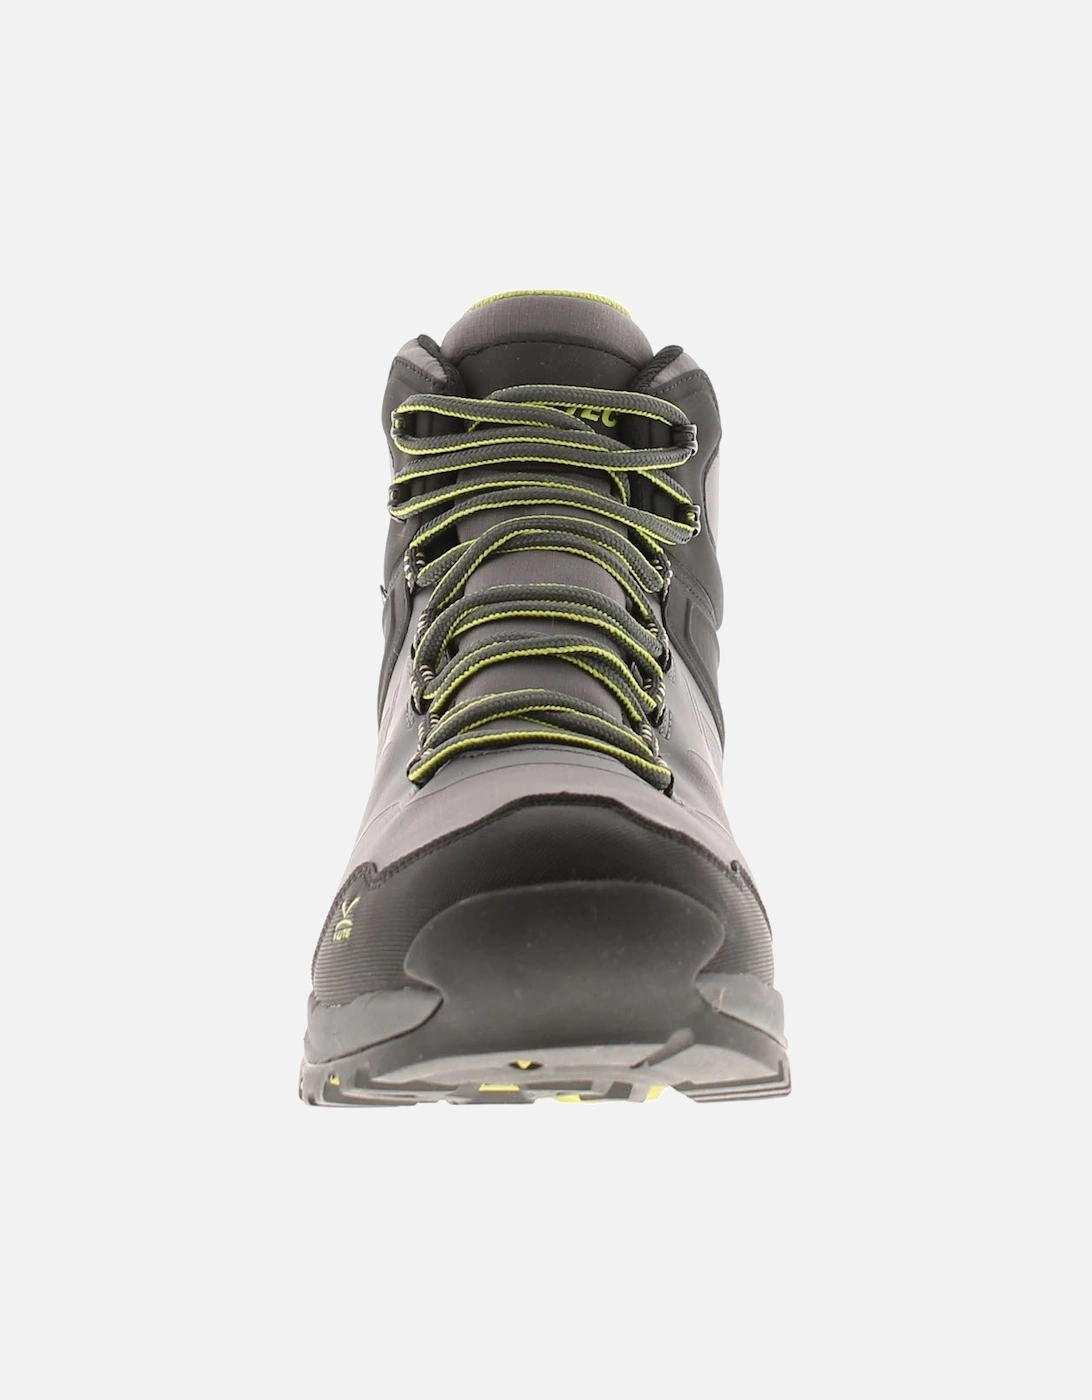 Mens Boots V Lite Psych Wp Lace Up Walking Hiking Trail Waterproof Grey U